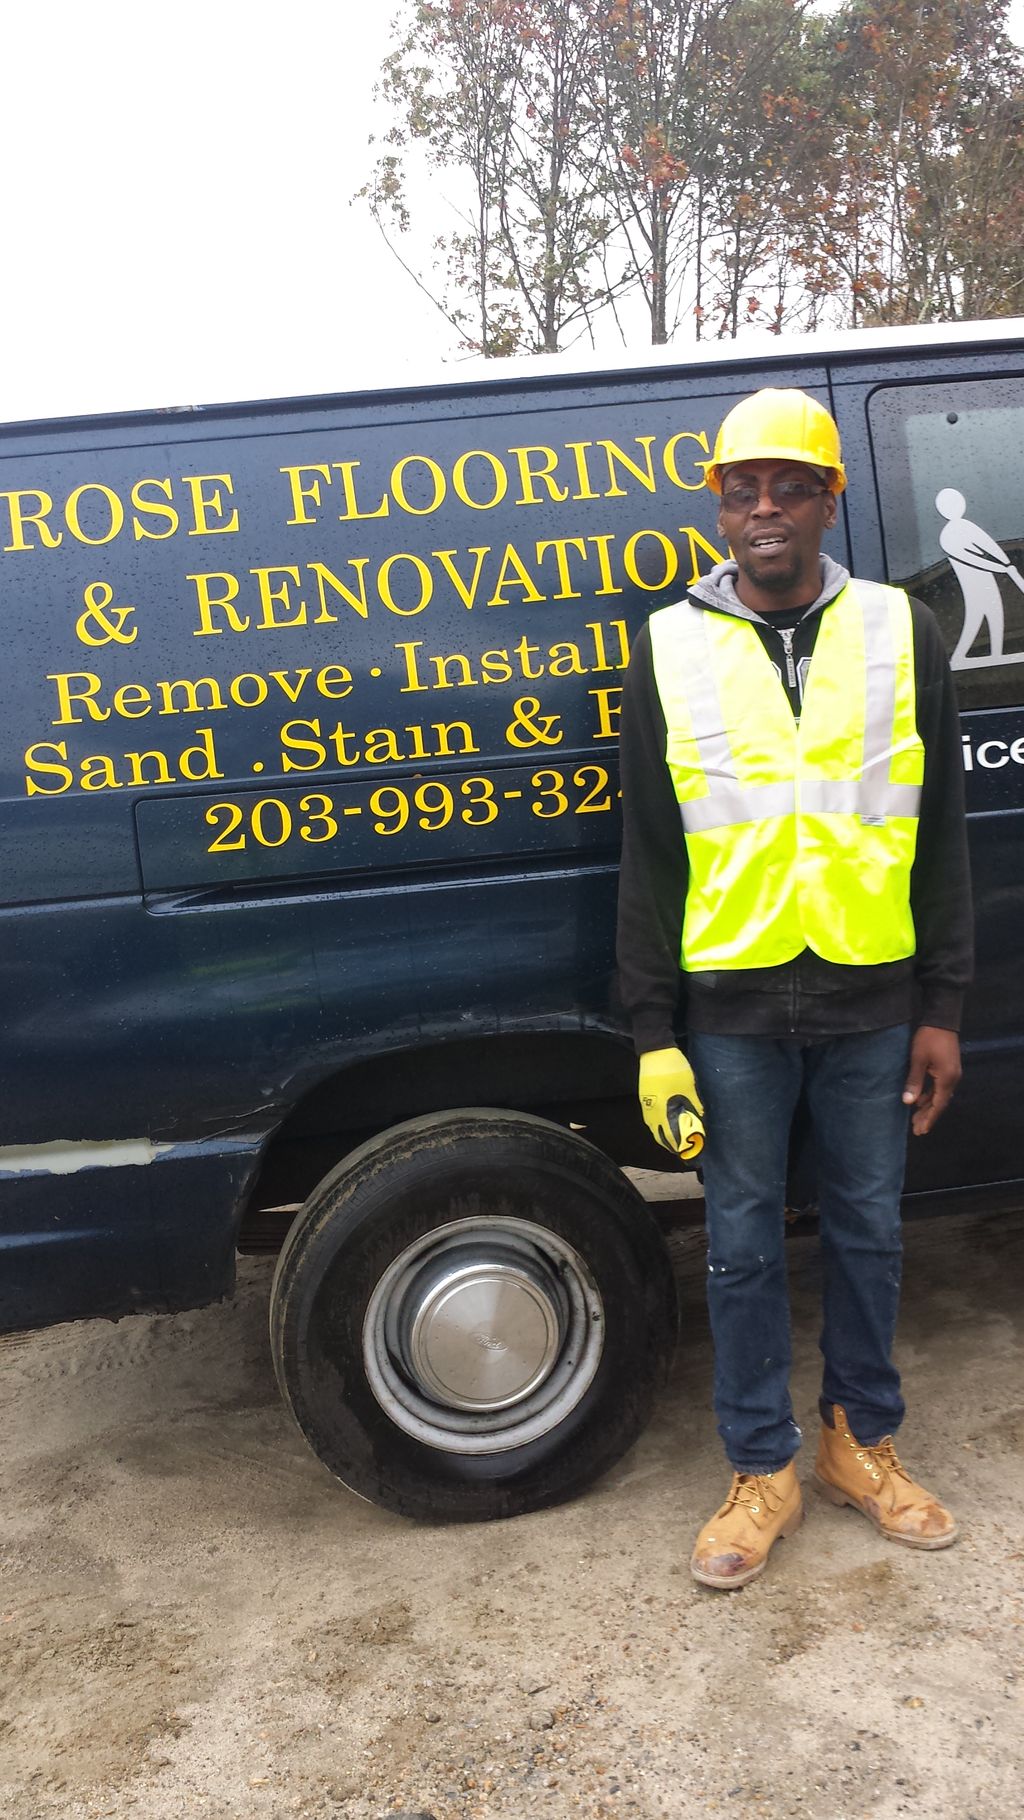 Rose Floorings & Renovations